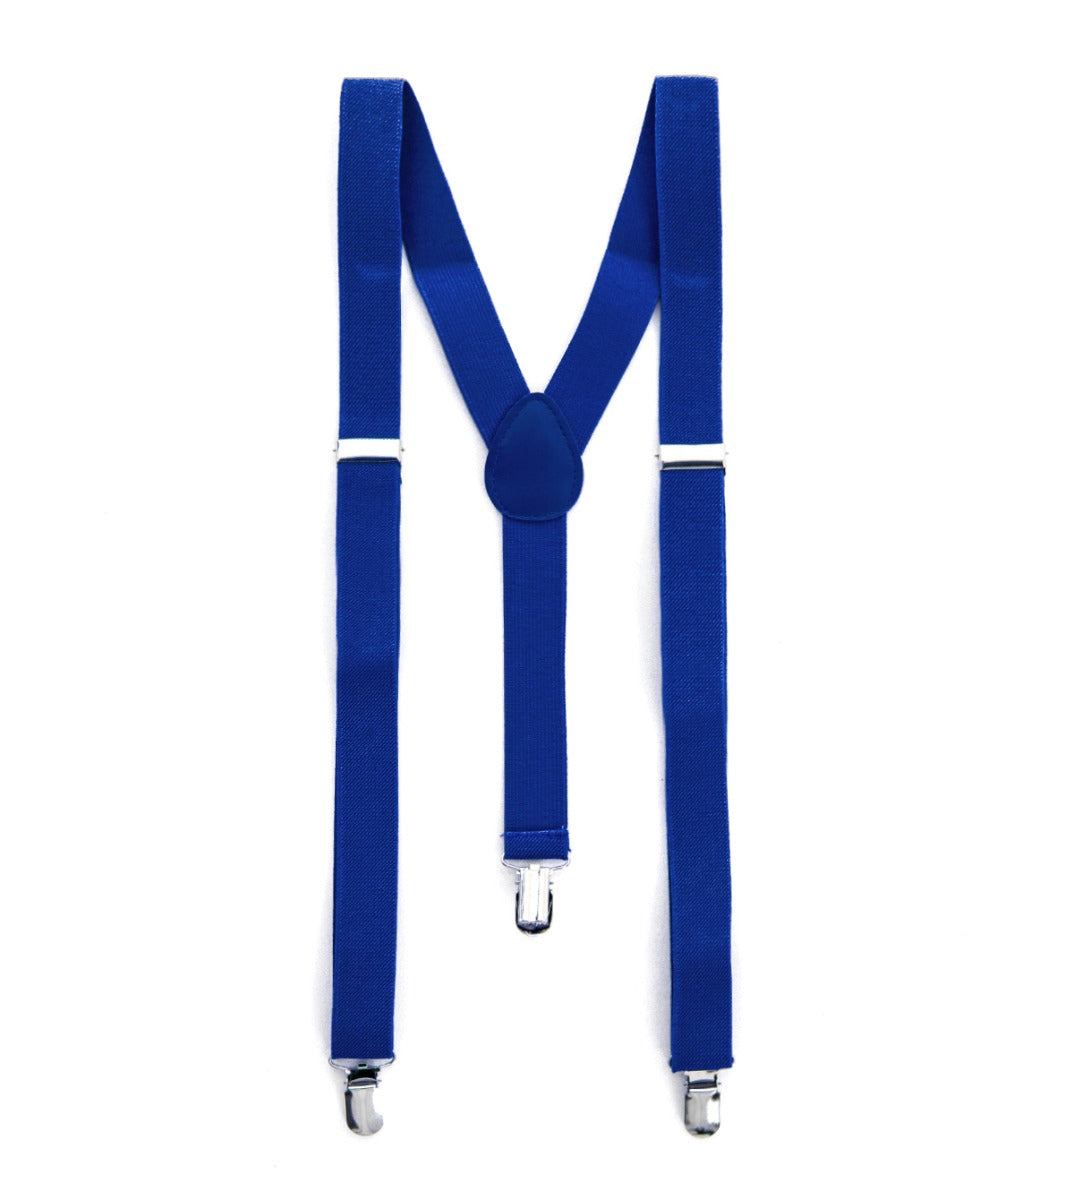 Adjustable Suspenders for Men Unisex Basic Elastic Royal Blue Metal Buckles Hooks Solid Color GIOSAL-BR1021A